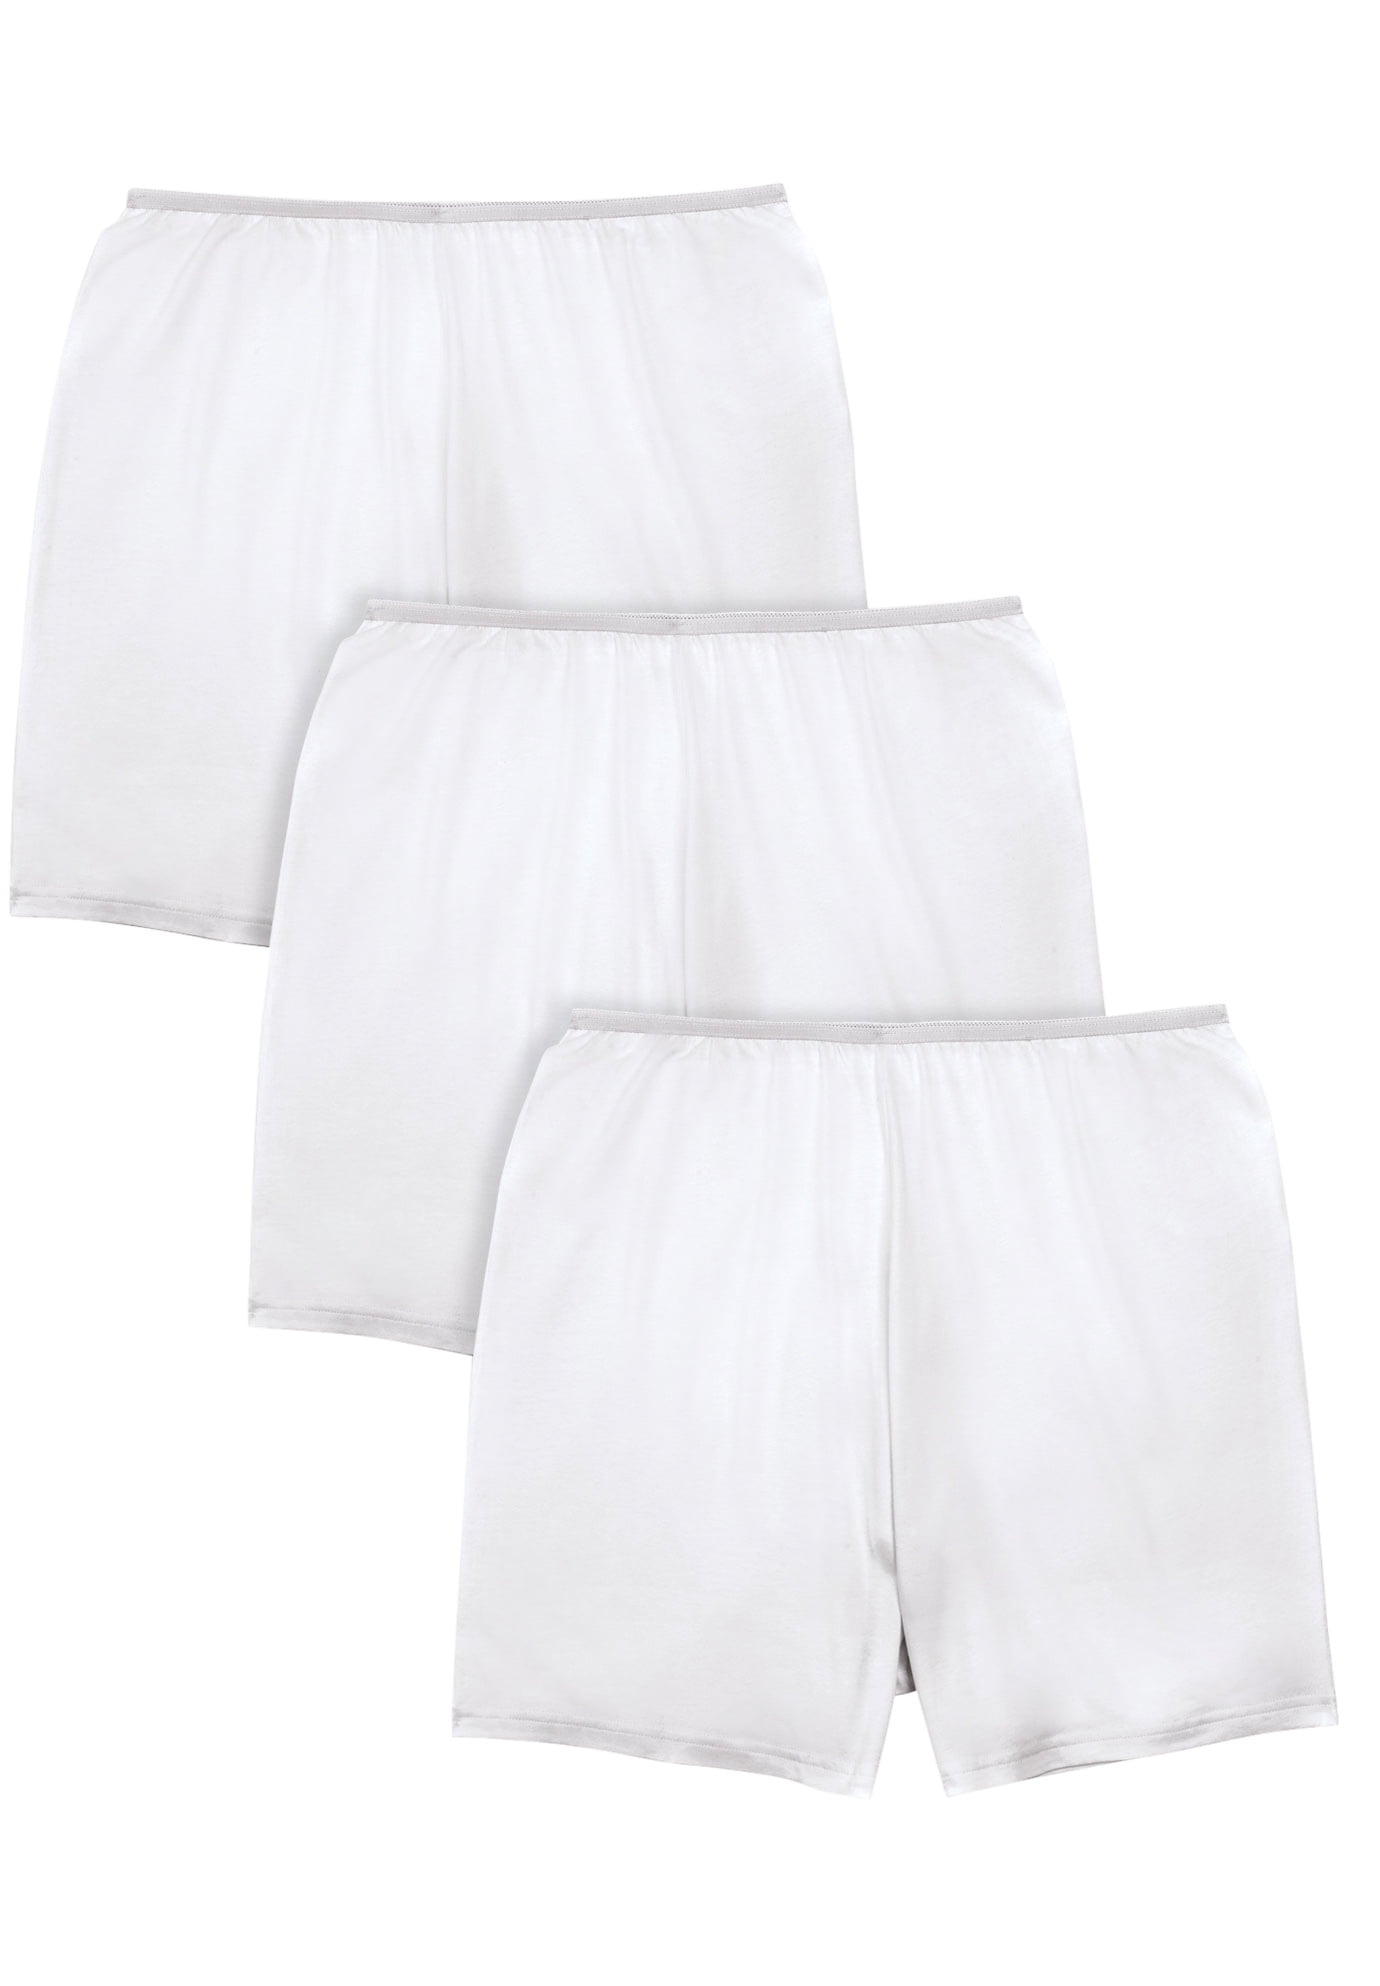 Comfort Choice Women's Plus Size Stretch Cotton Boxer 3-Pack Underwear ...